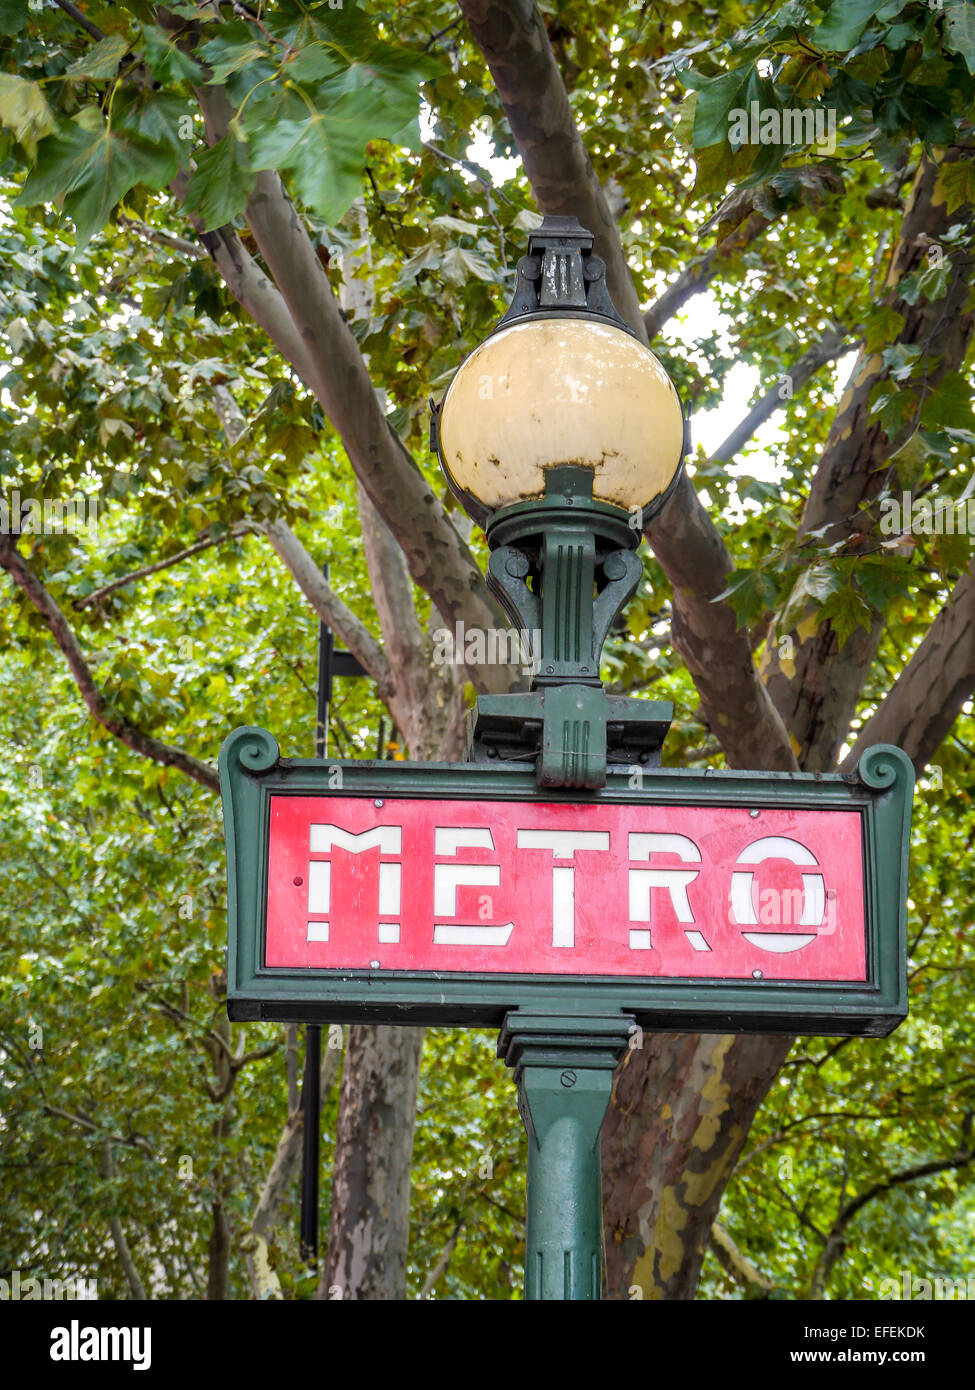 Insegna retrò della metropolitana parigina Foto Stock